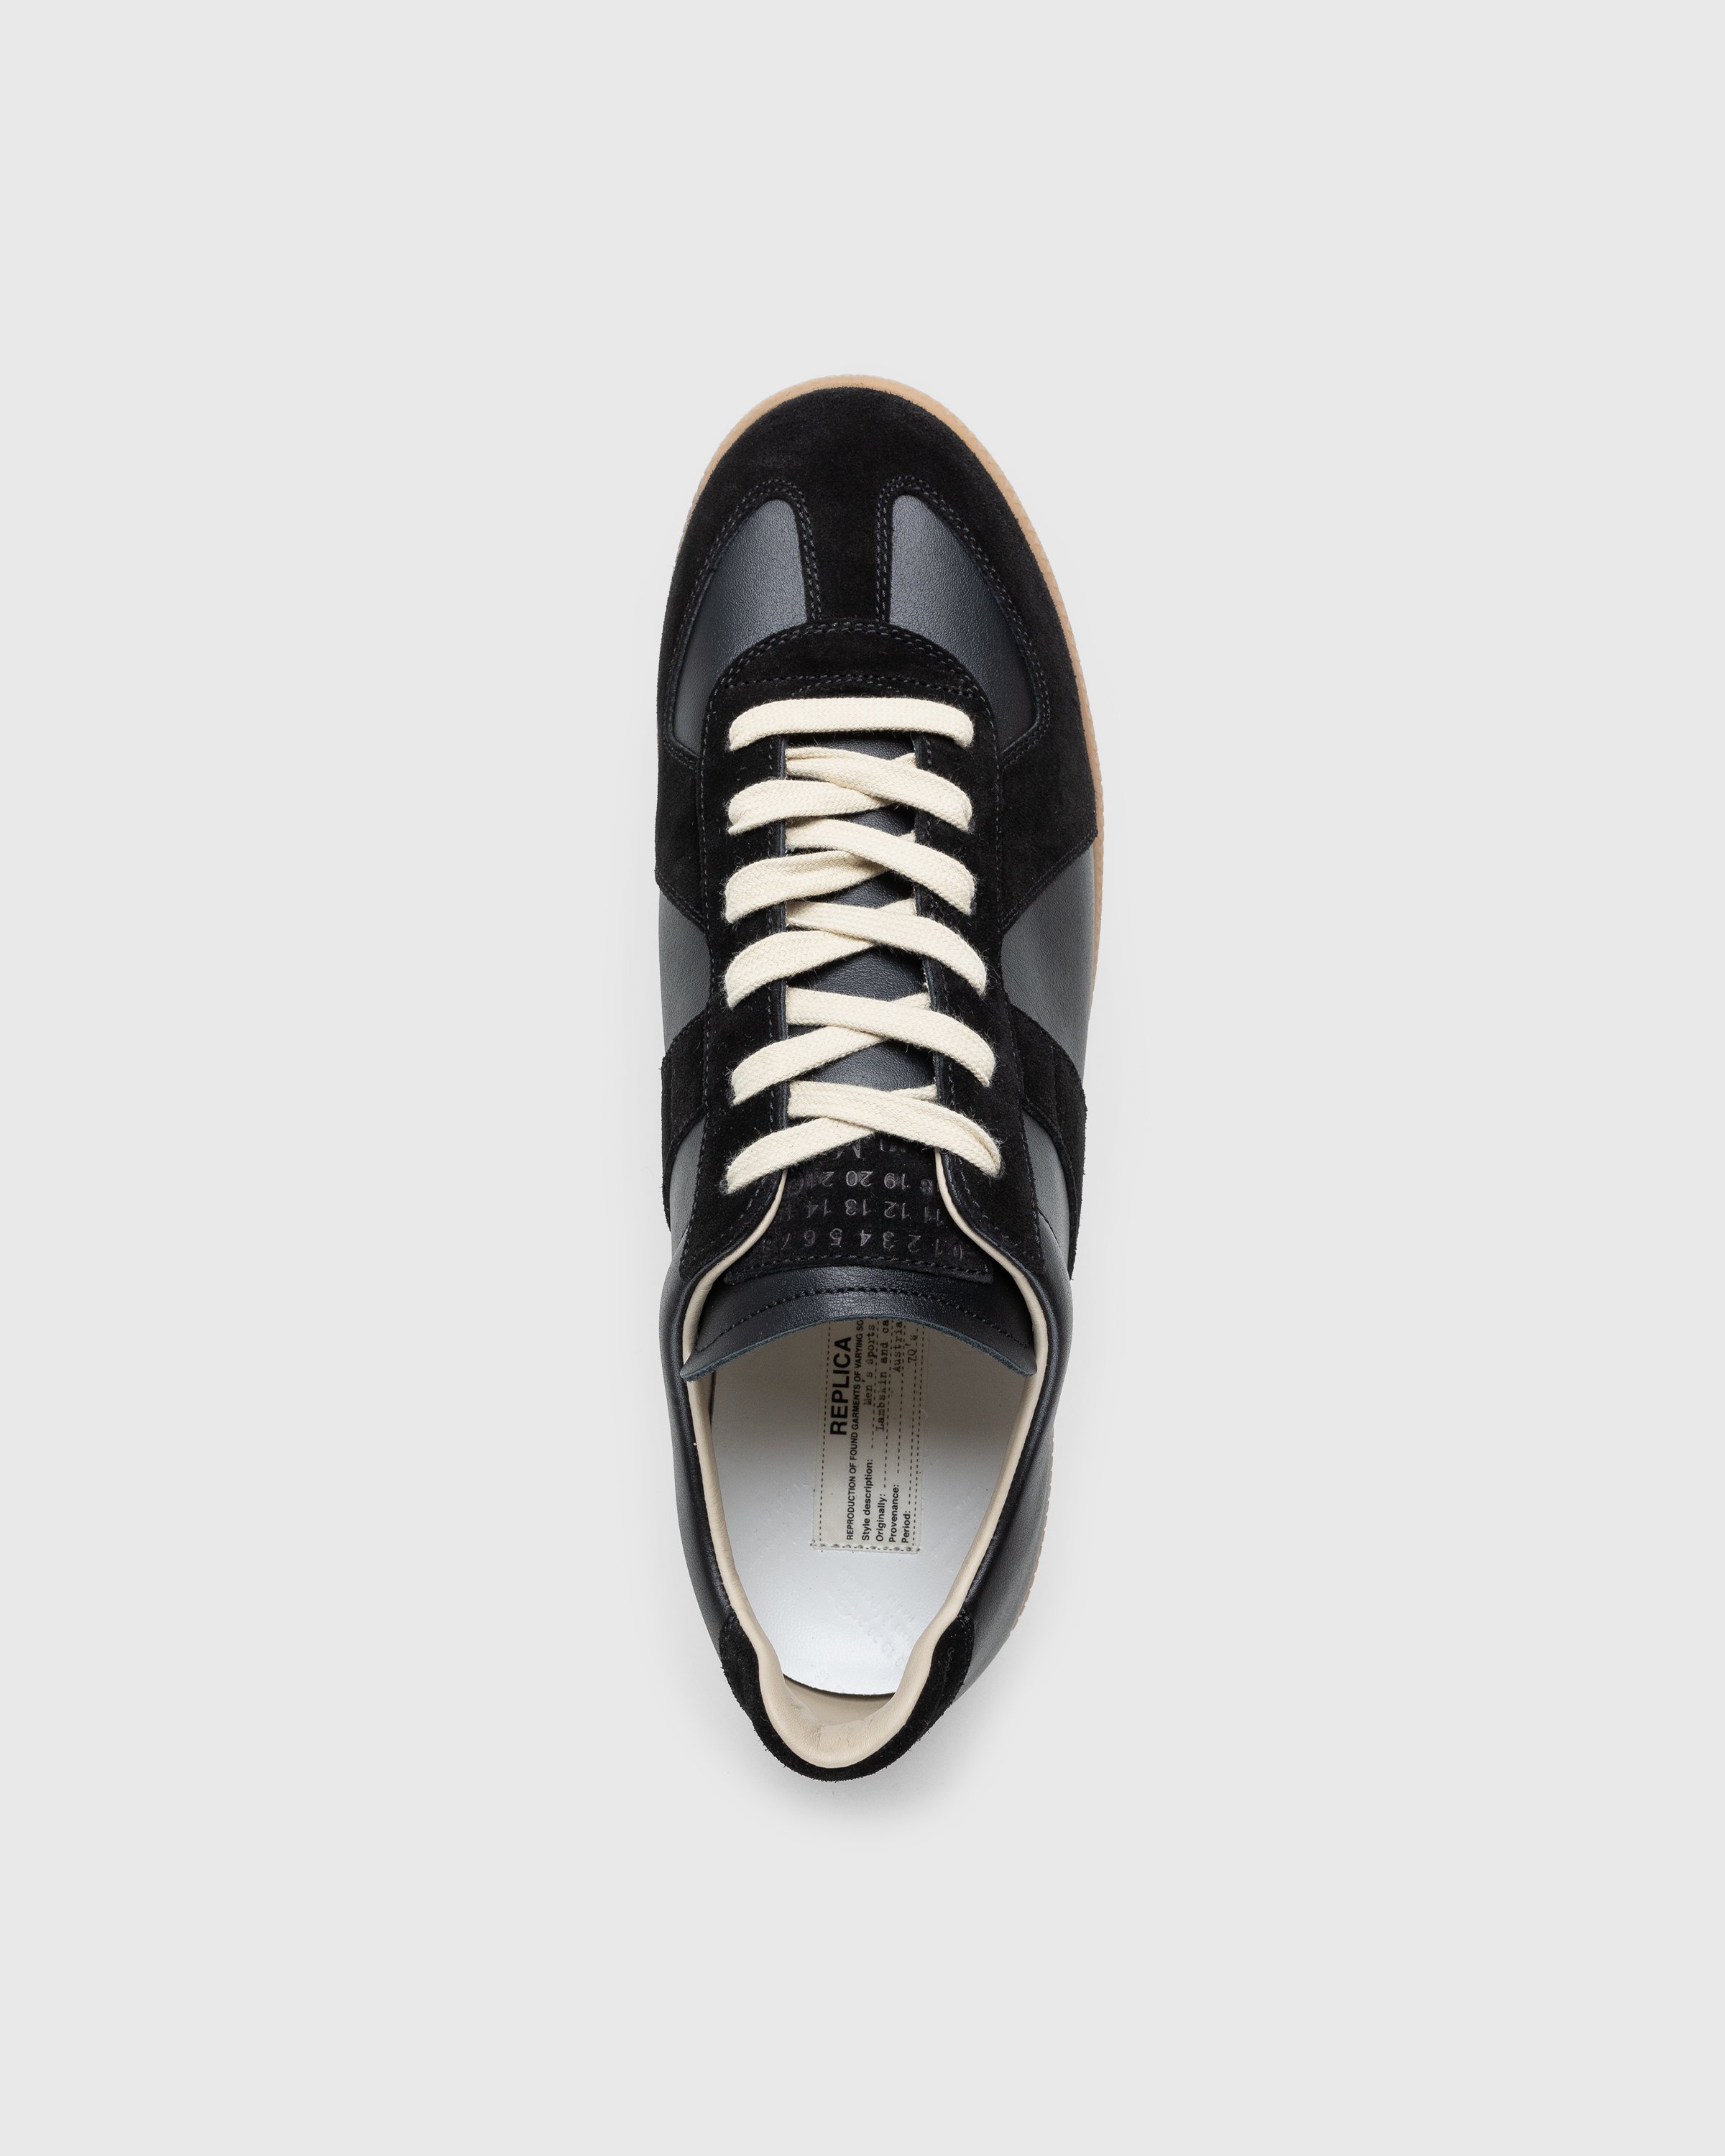 Maison Margiela - Leather Replica Sneakers Black - Footwear - Black - Image 5